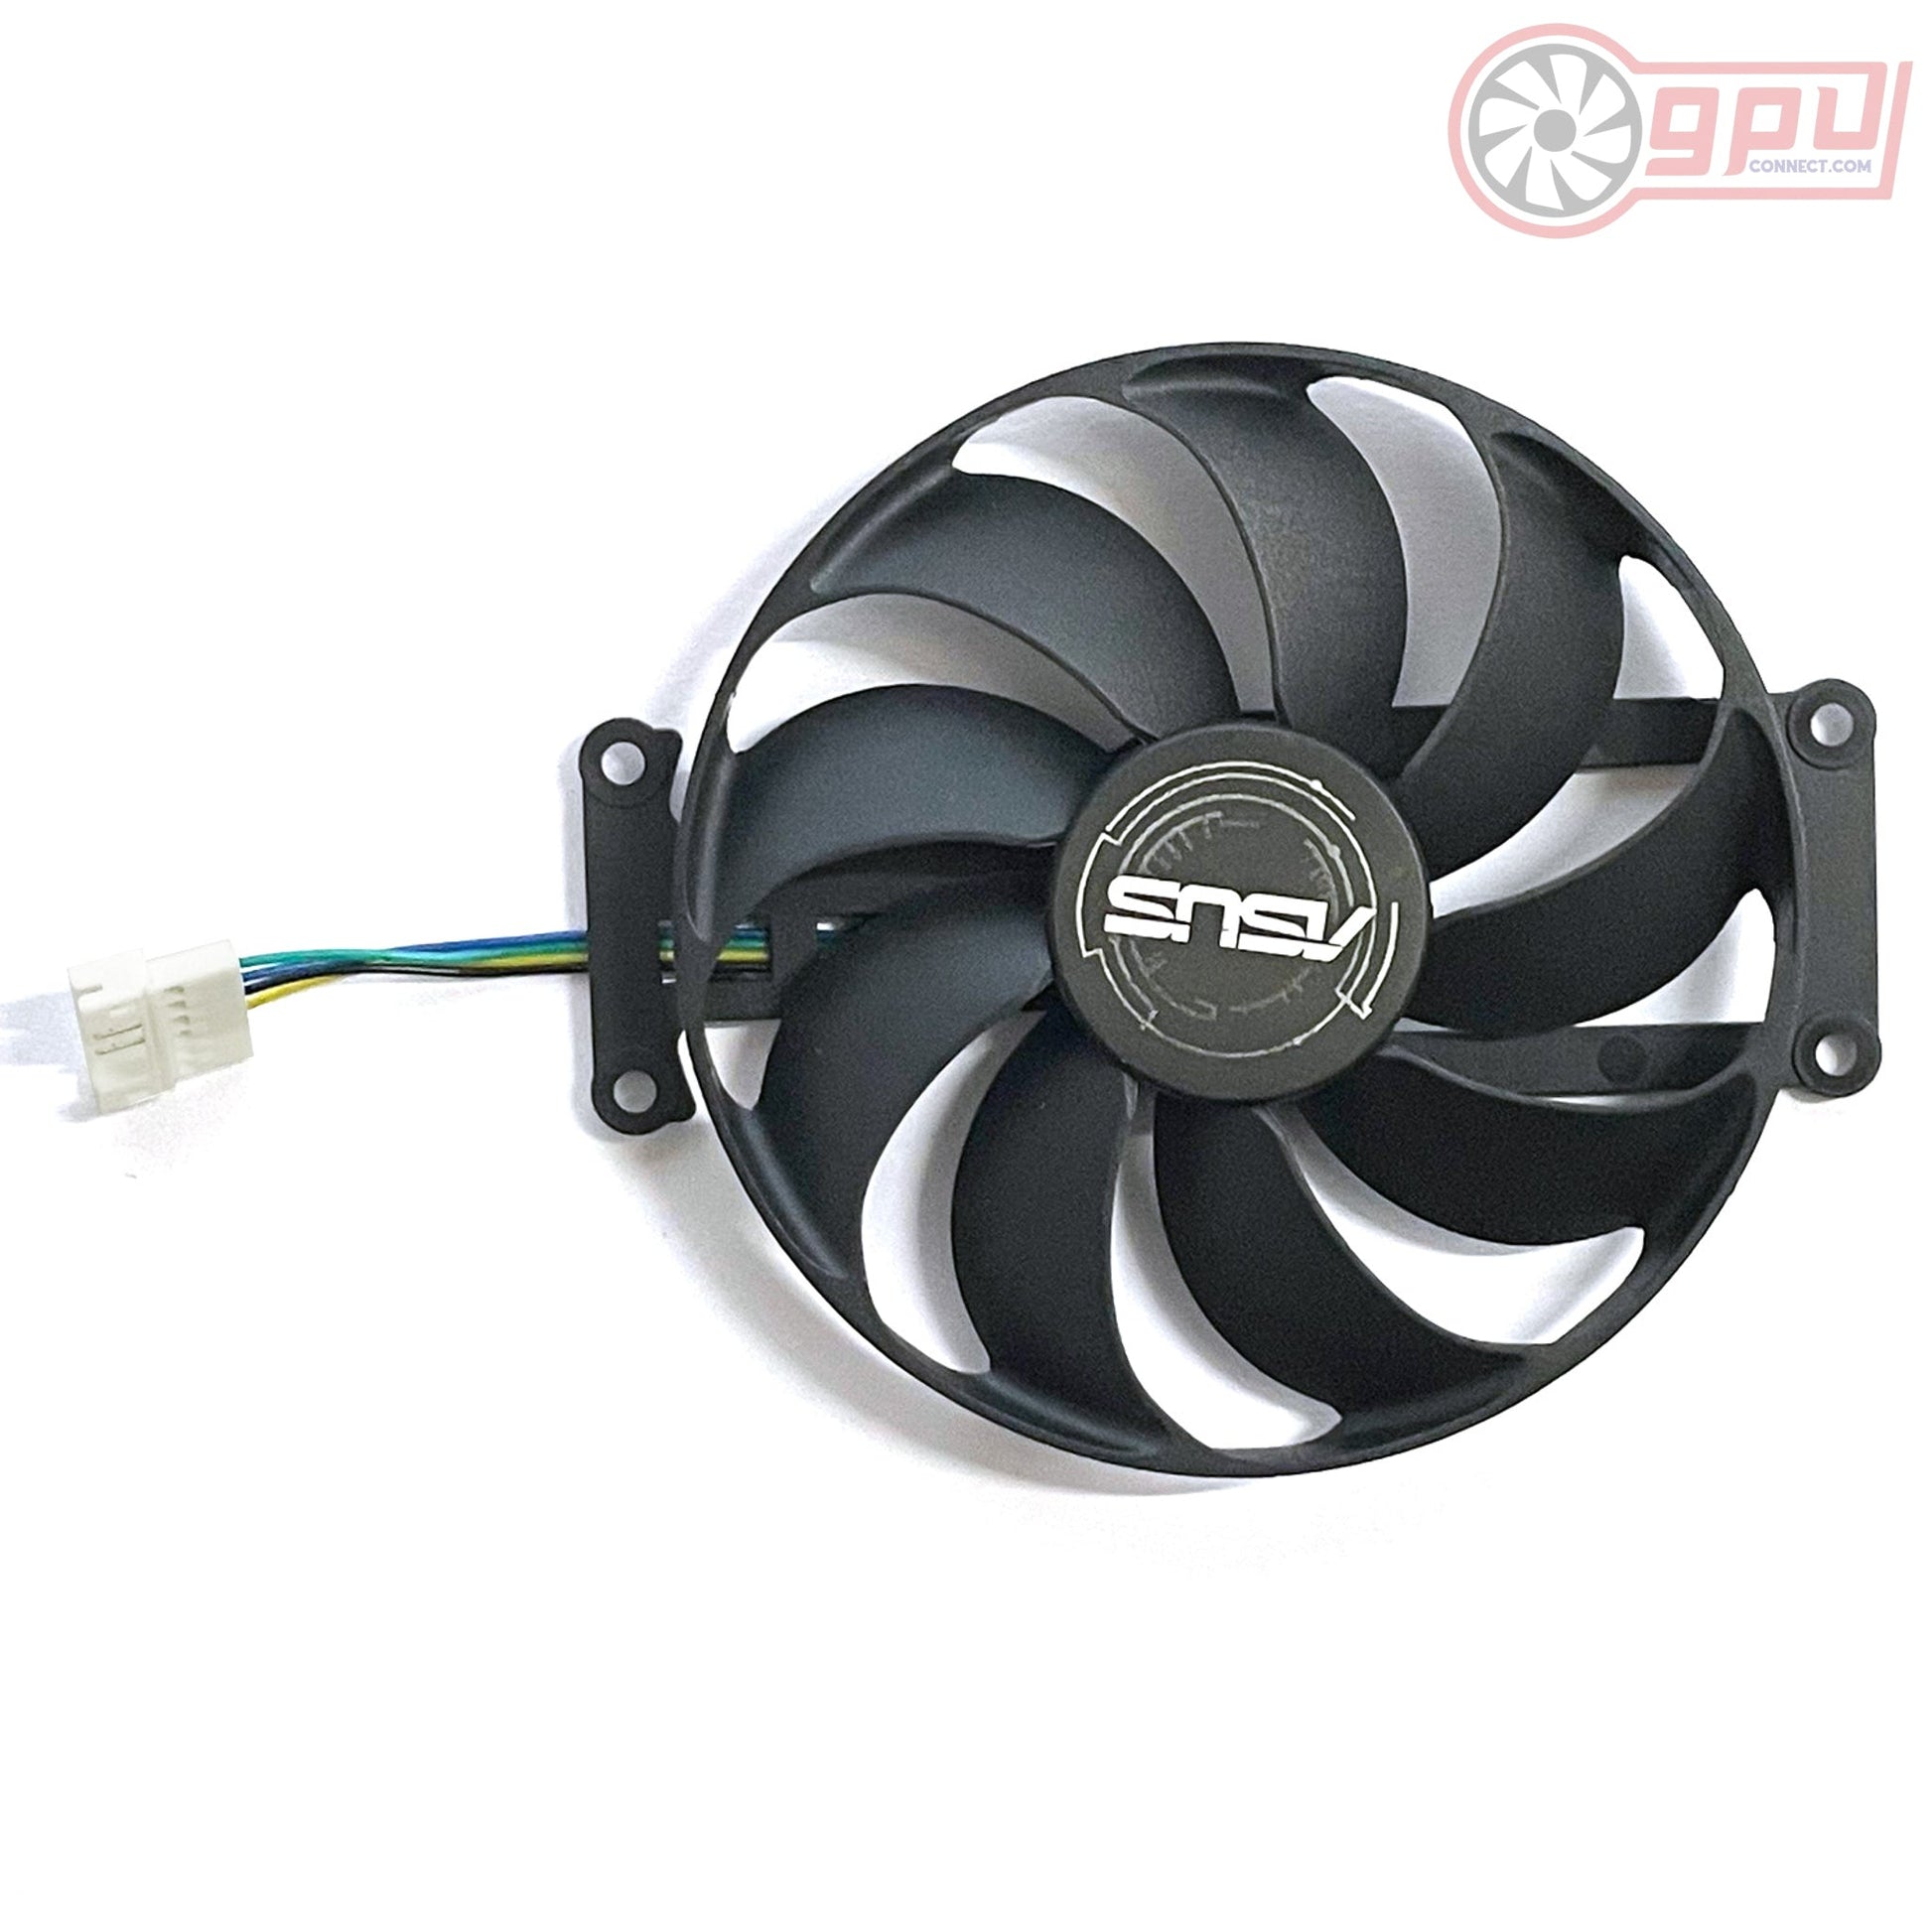 ASUS RTX 2060 2070 GTX 1660 DUAL EVO - Replacement GPU Cooling Fan Set - GPUCONNECT.COM